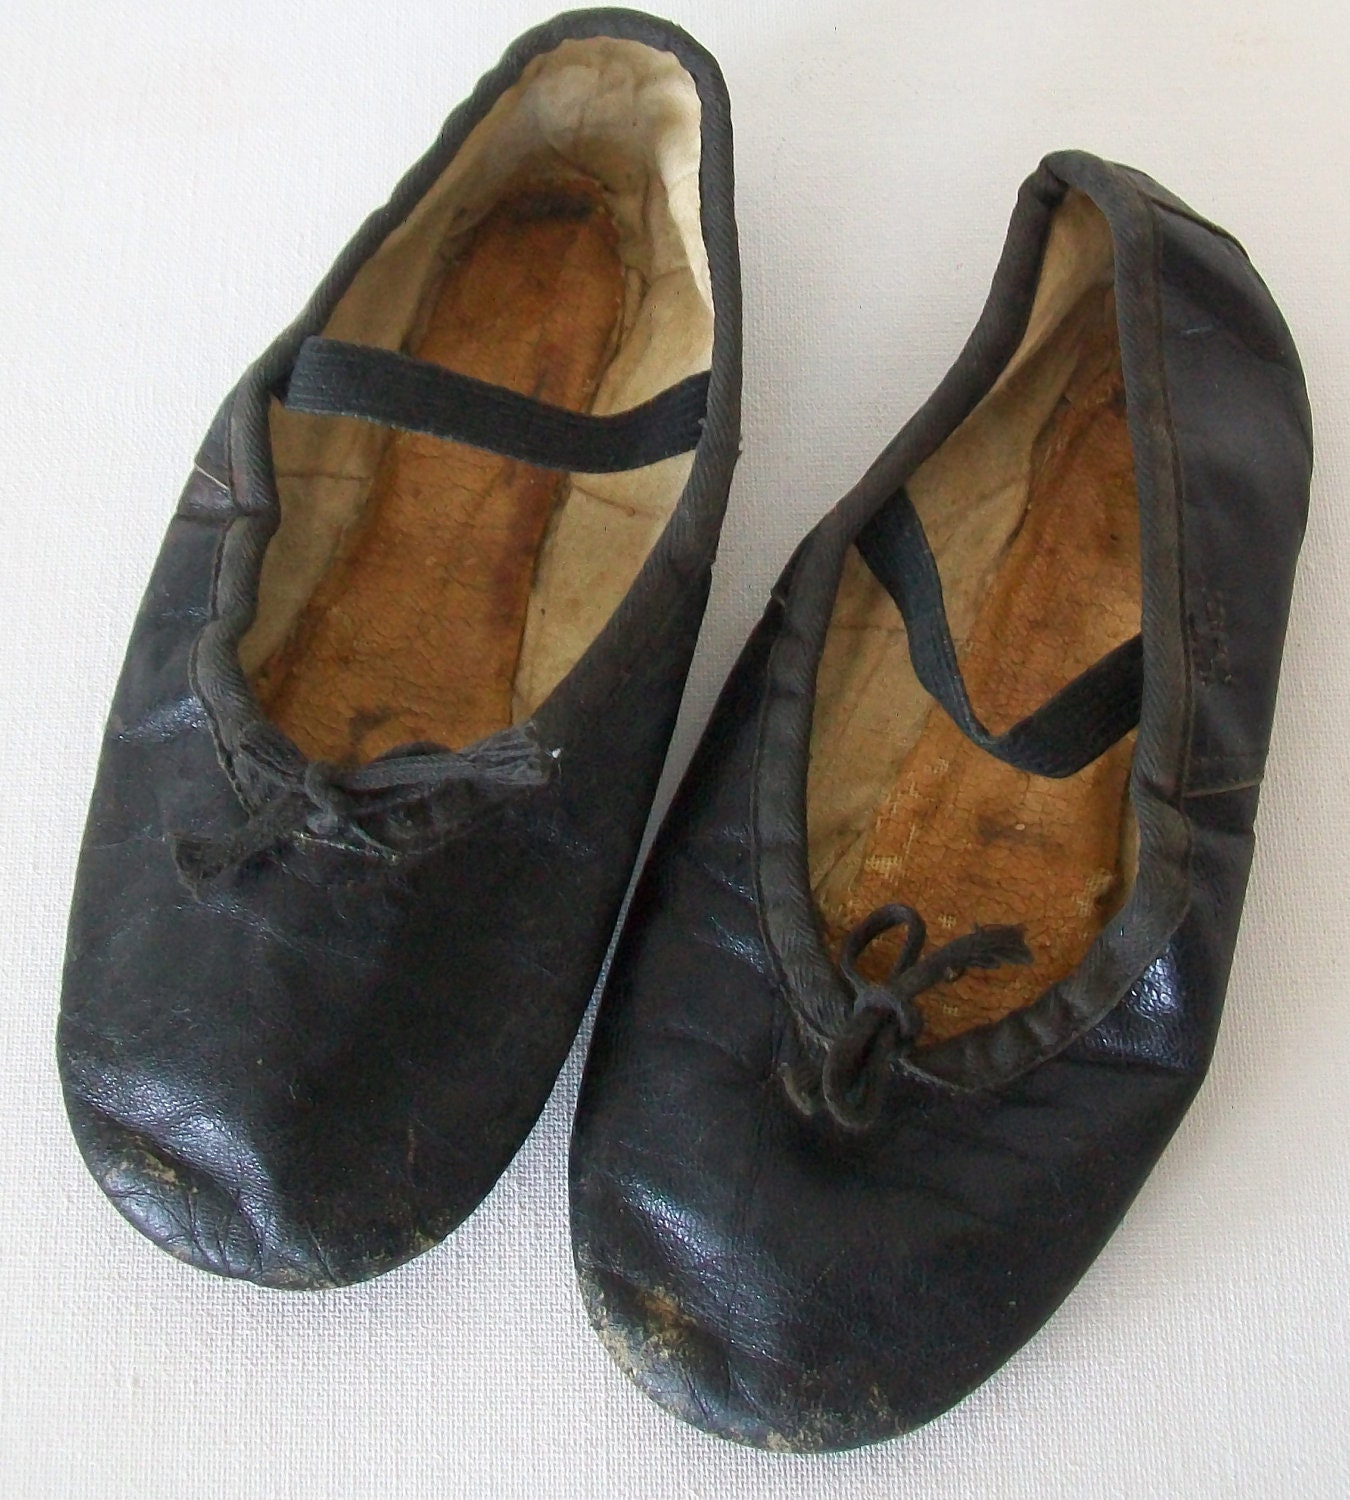 1950 Vintage Ballet Shoes Worn Out Child Size